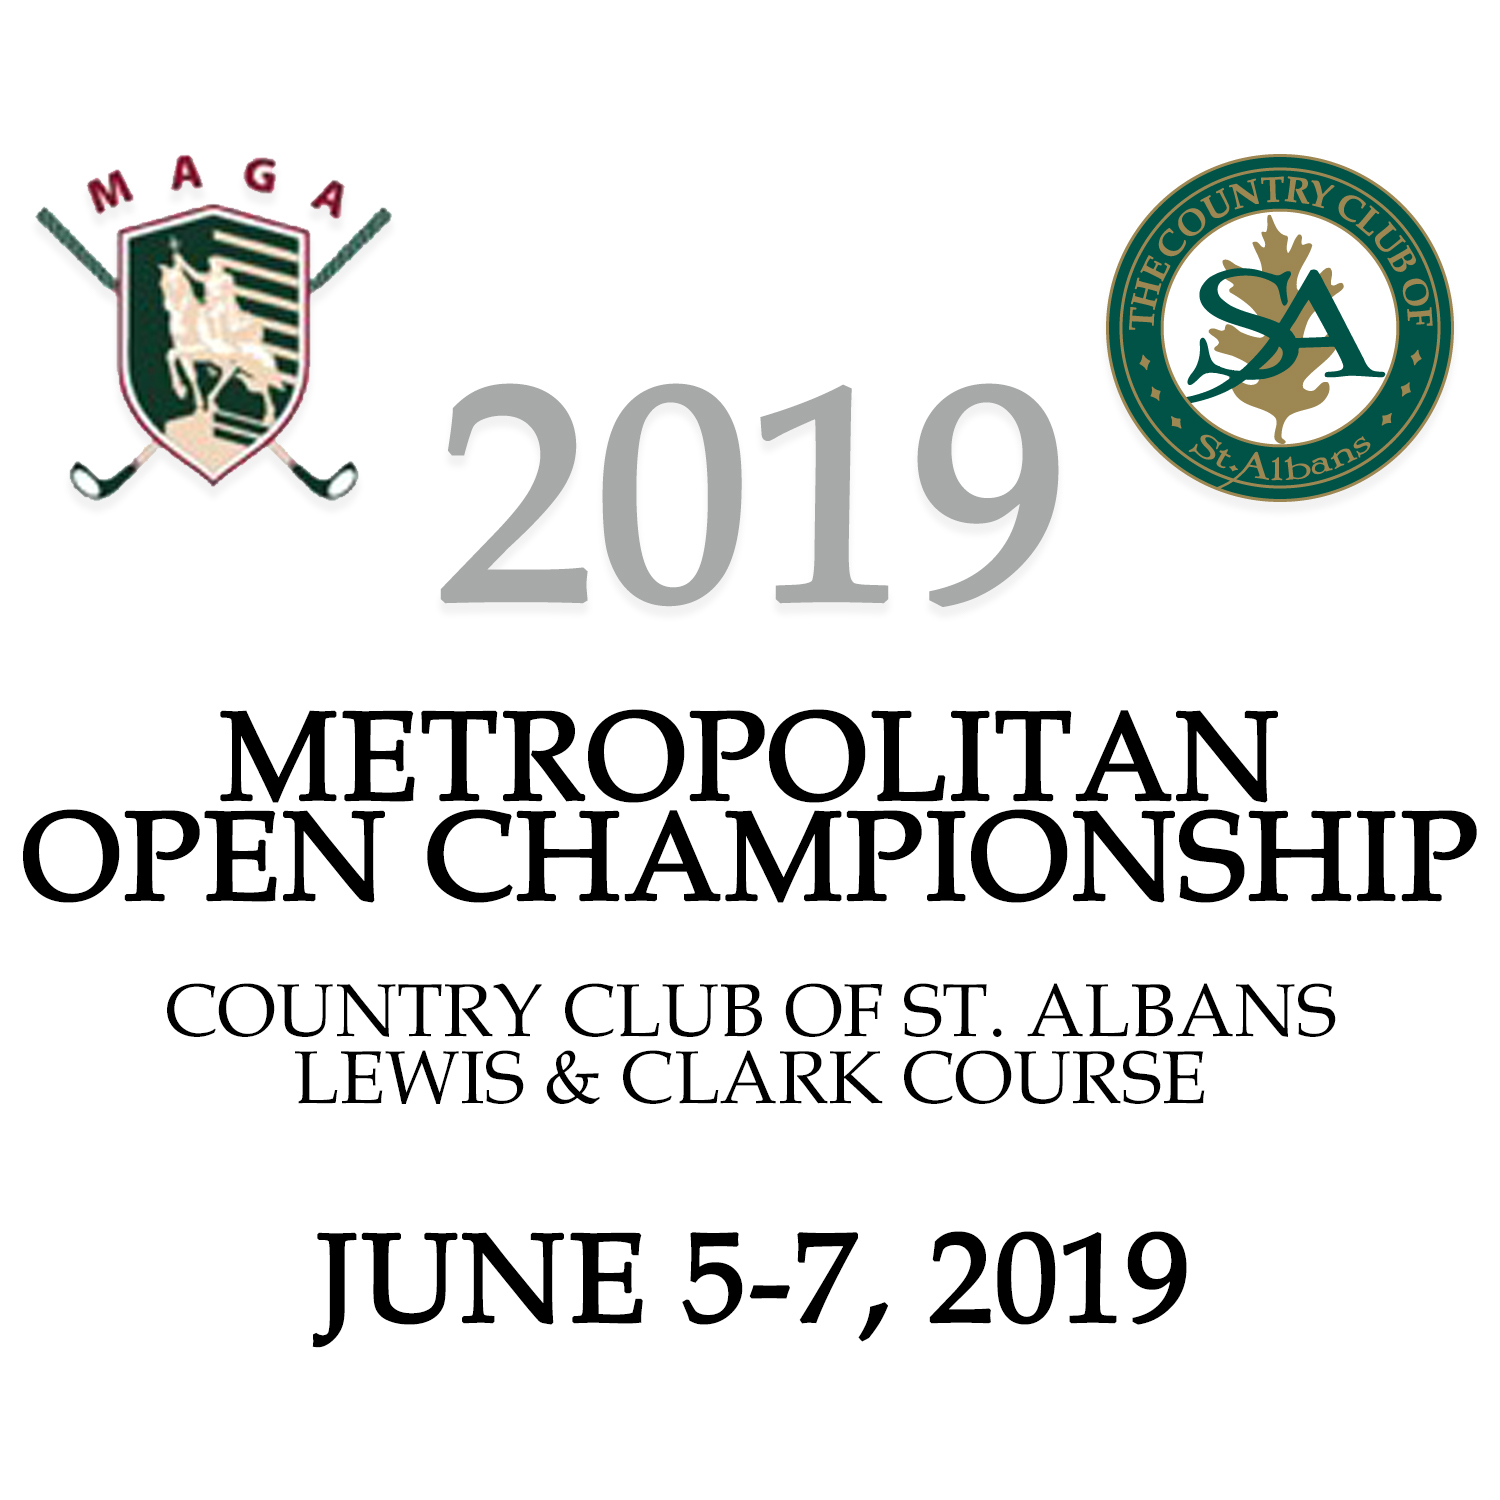 The Metropolitan Open Championship